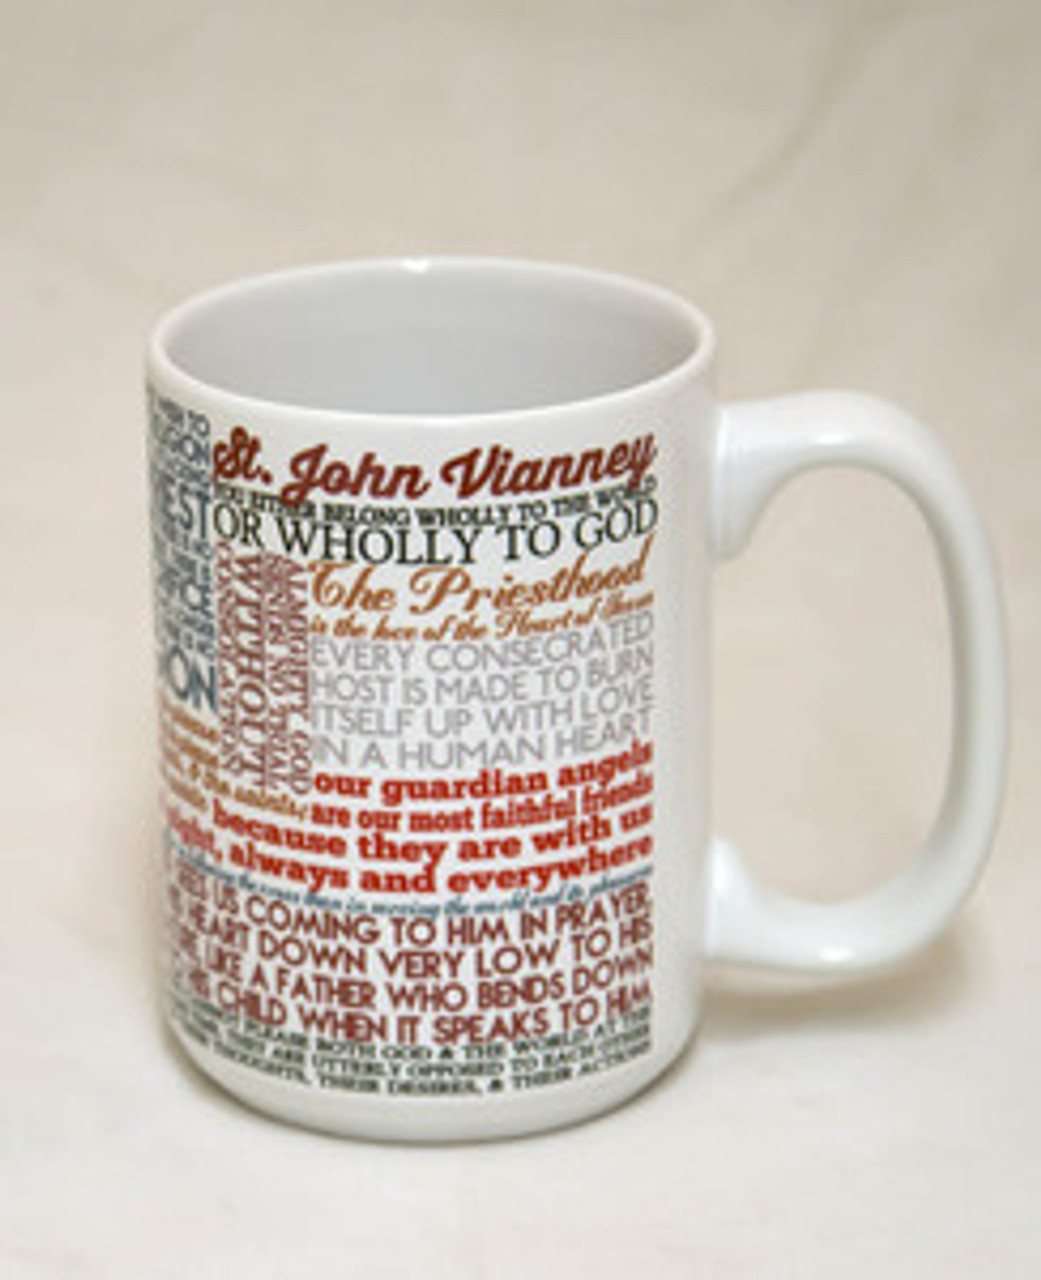 Saint John Vianney Quote Mug